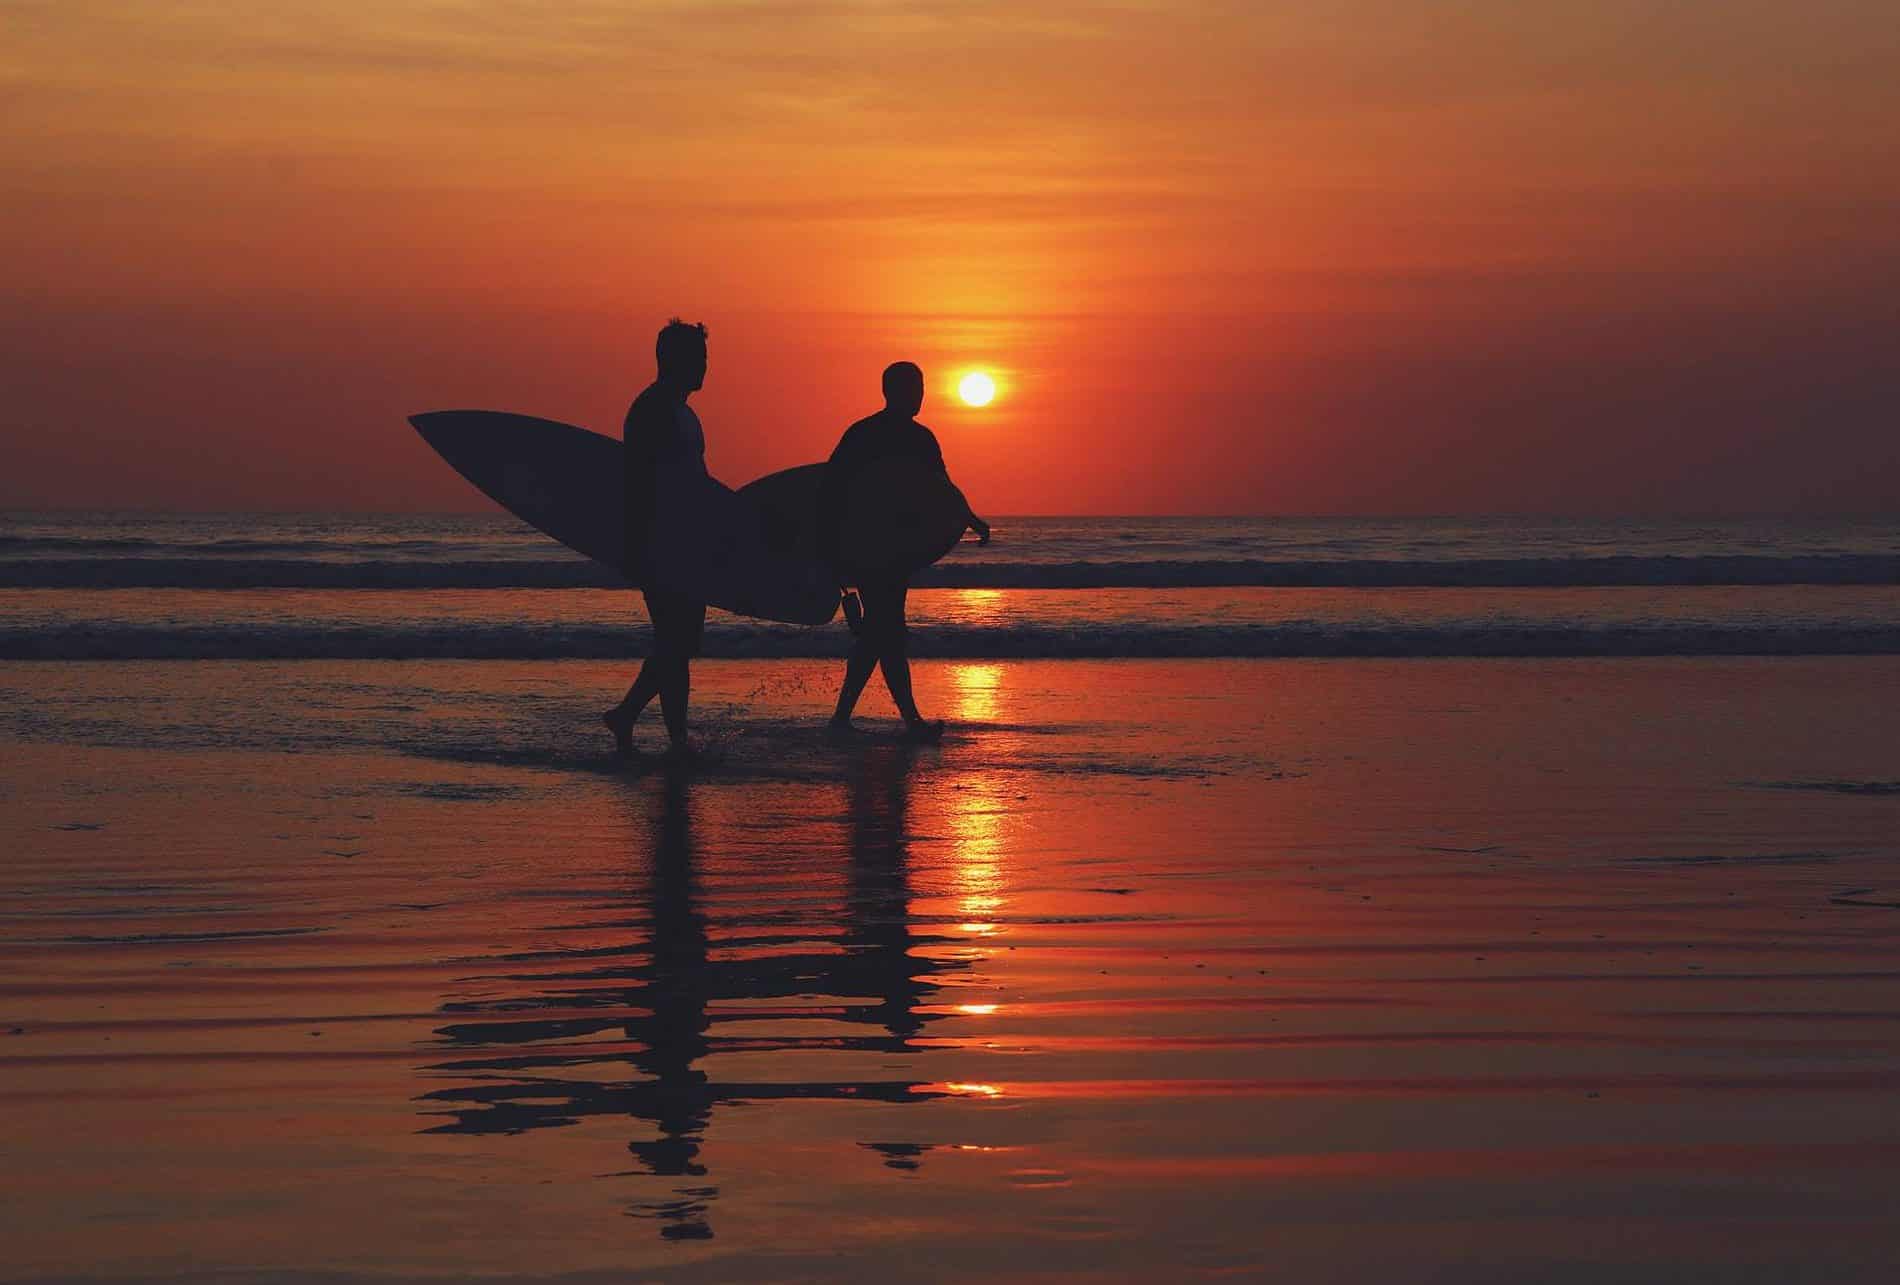 Surfing in Kuta Beach, Bali